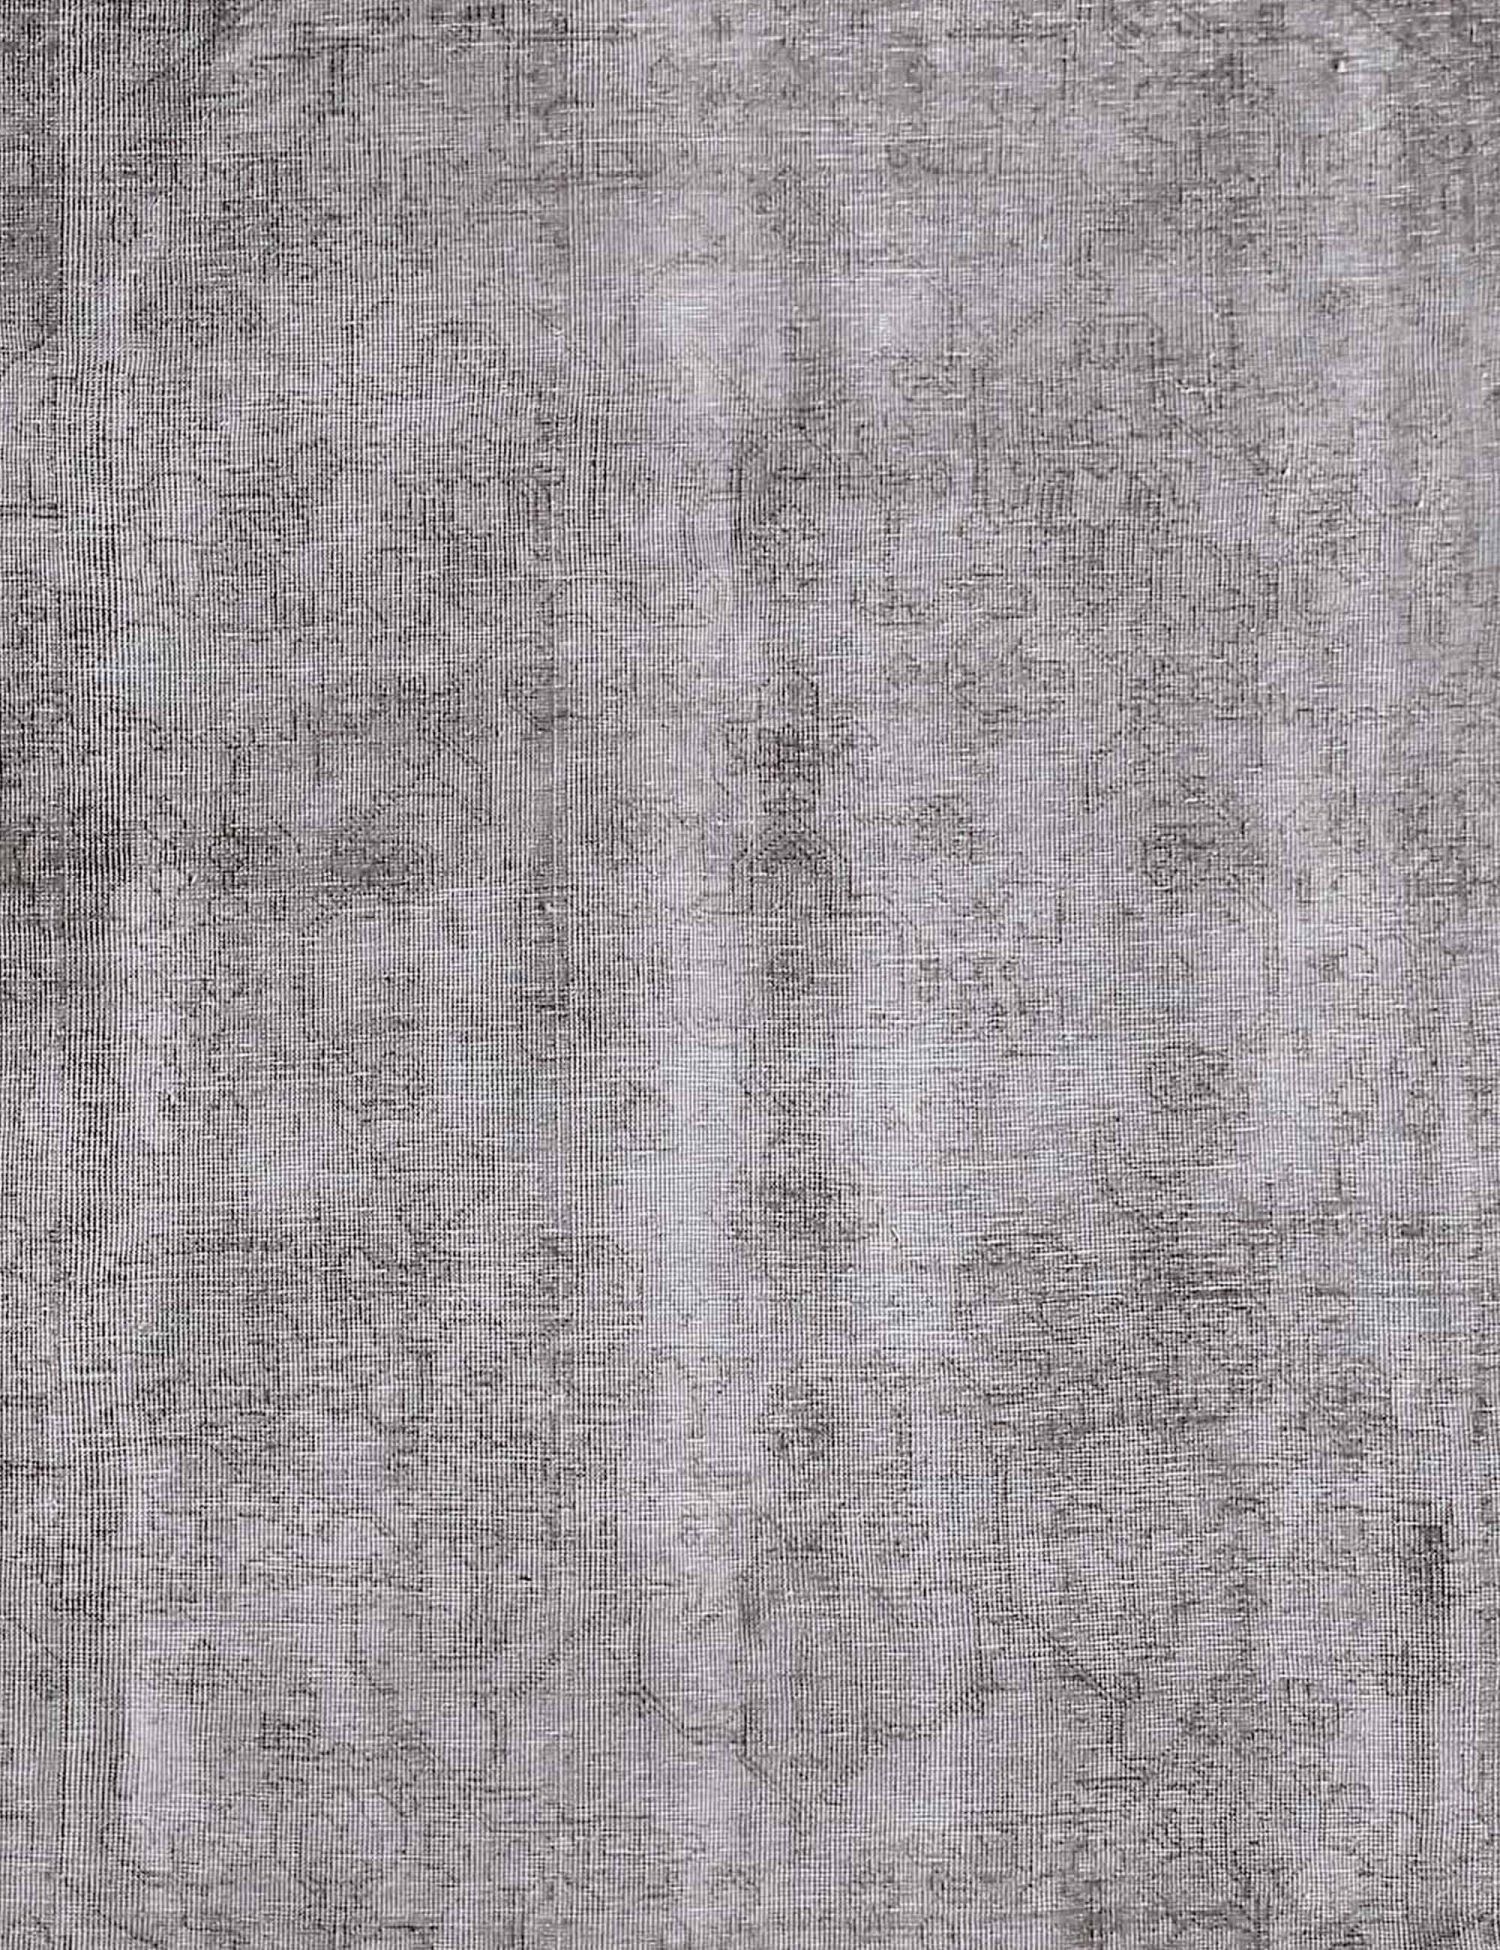 Persian Vintage Carpet  grey <br/>281 x 202 cm